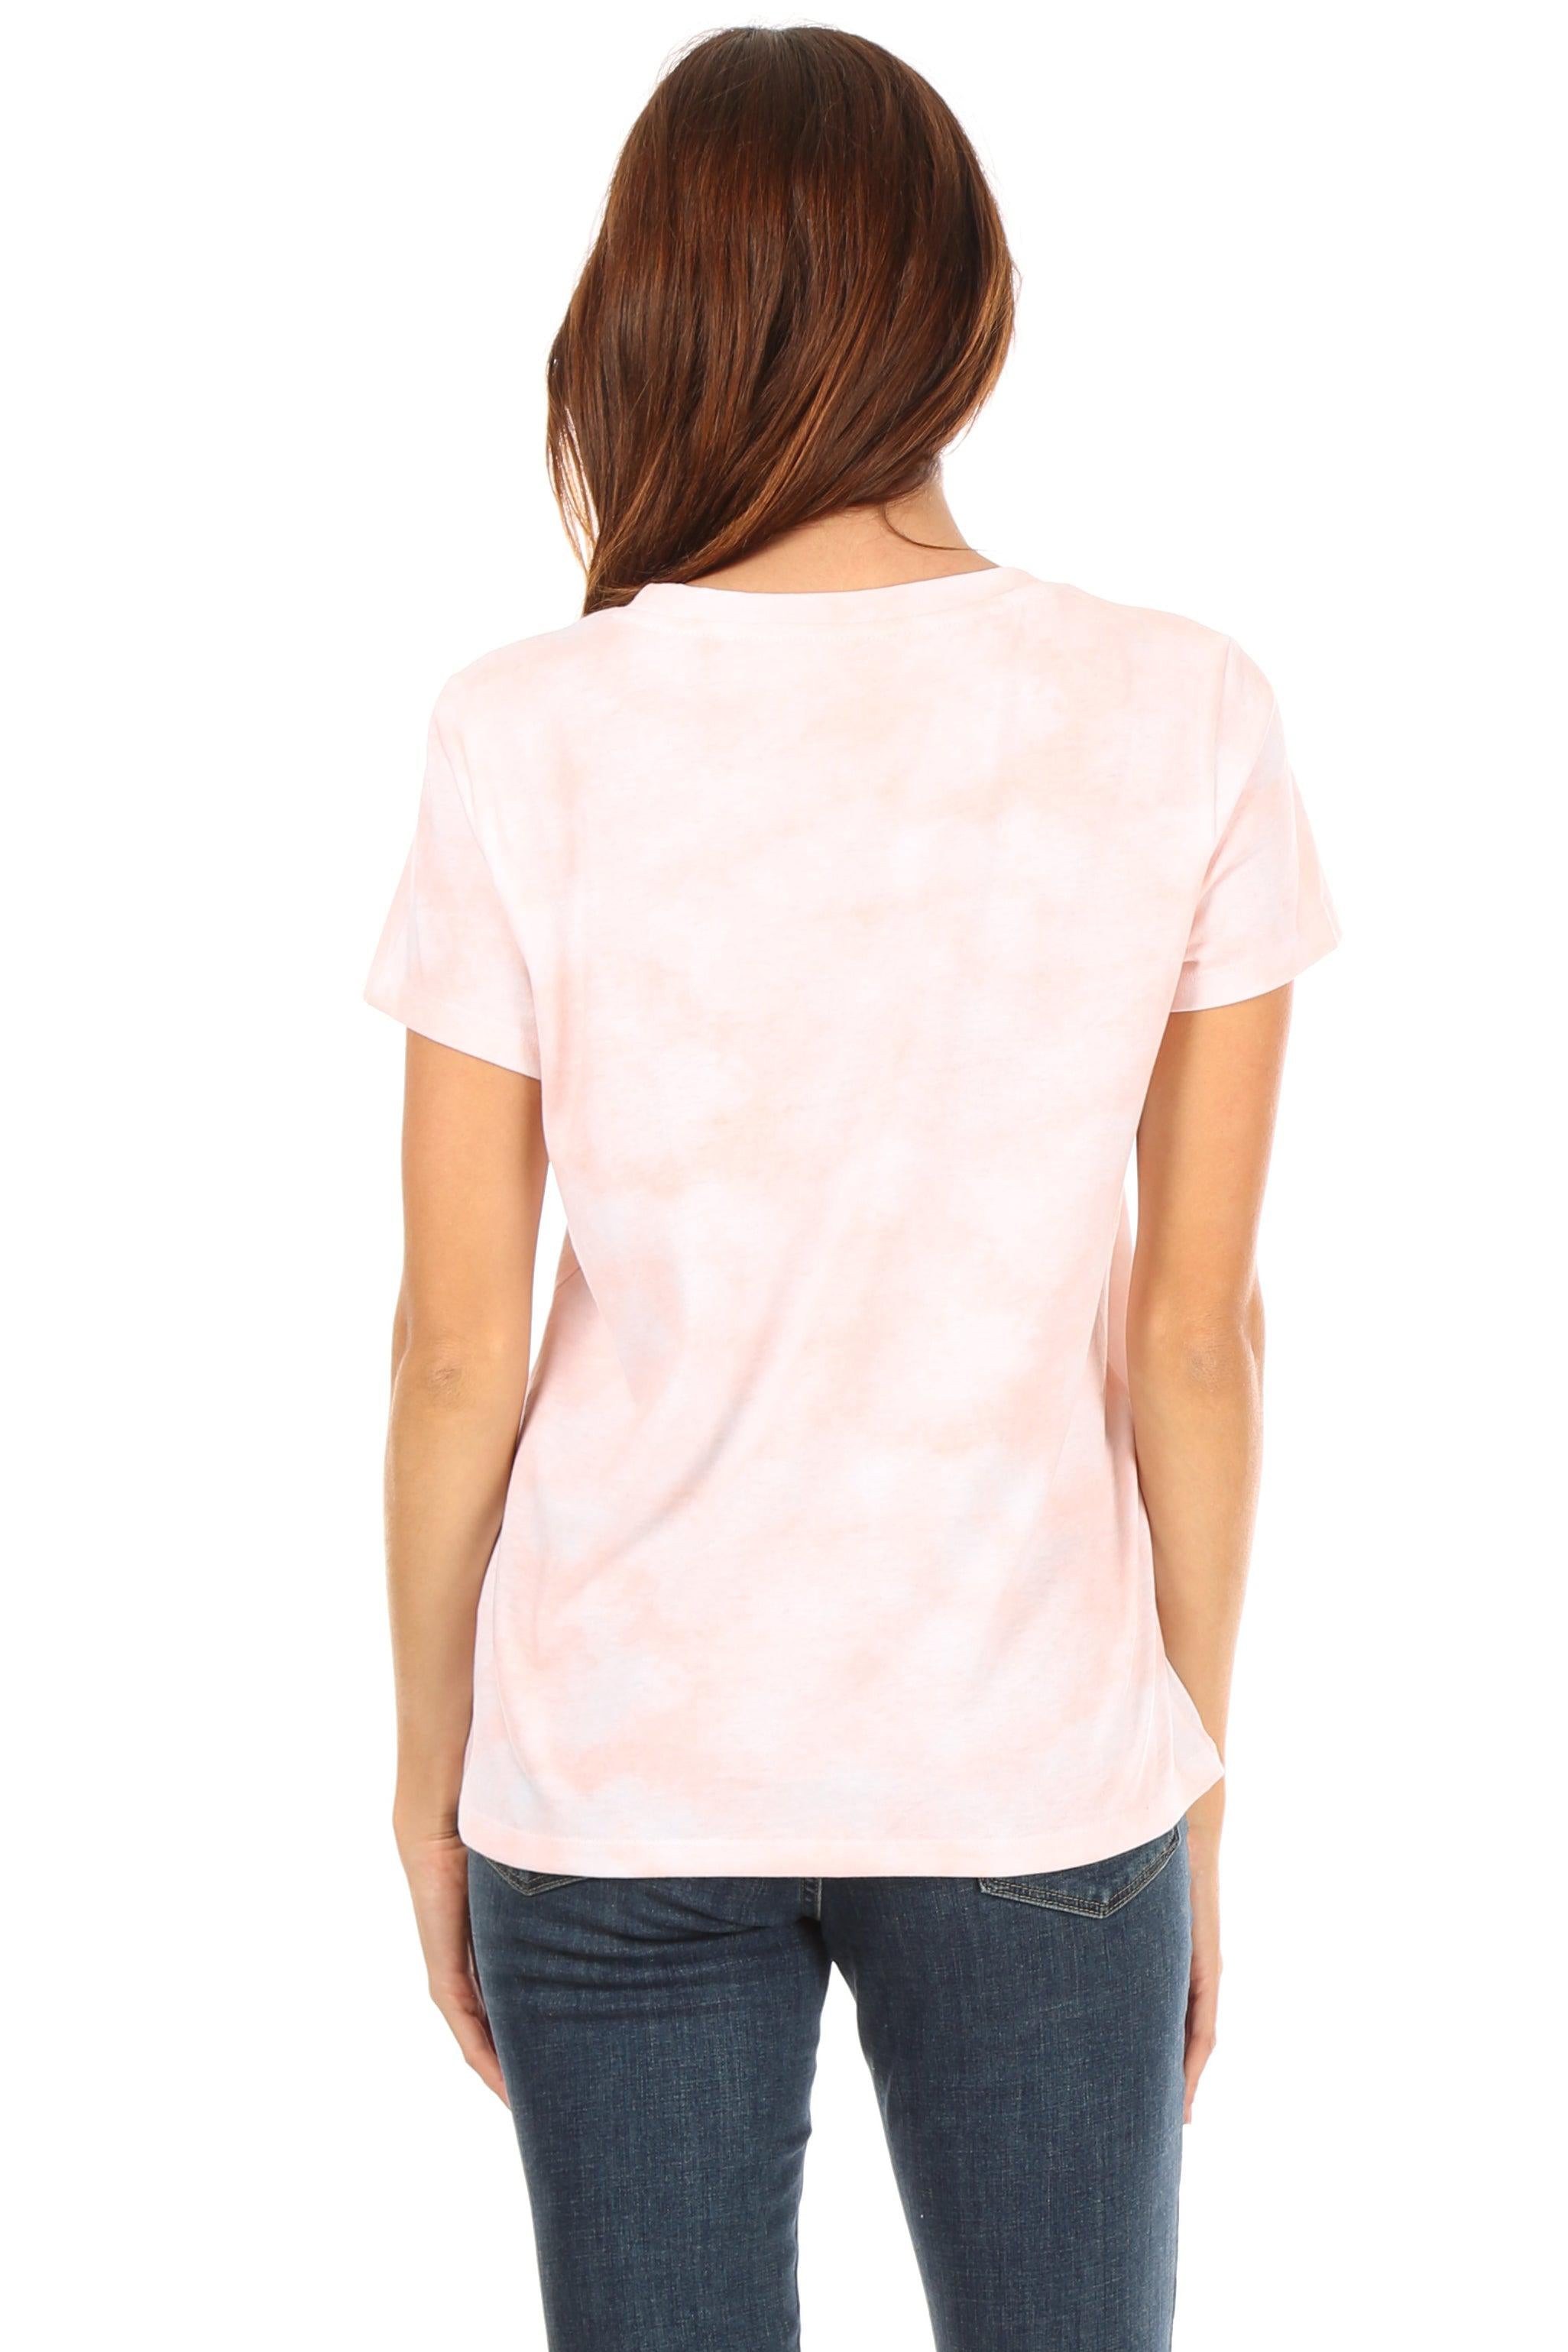 Women's "GIRL POWER" Short Sleeve Icon T-Shirt - Shop Rae Dunn Apparel and Sleepwear